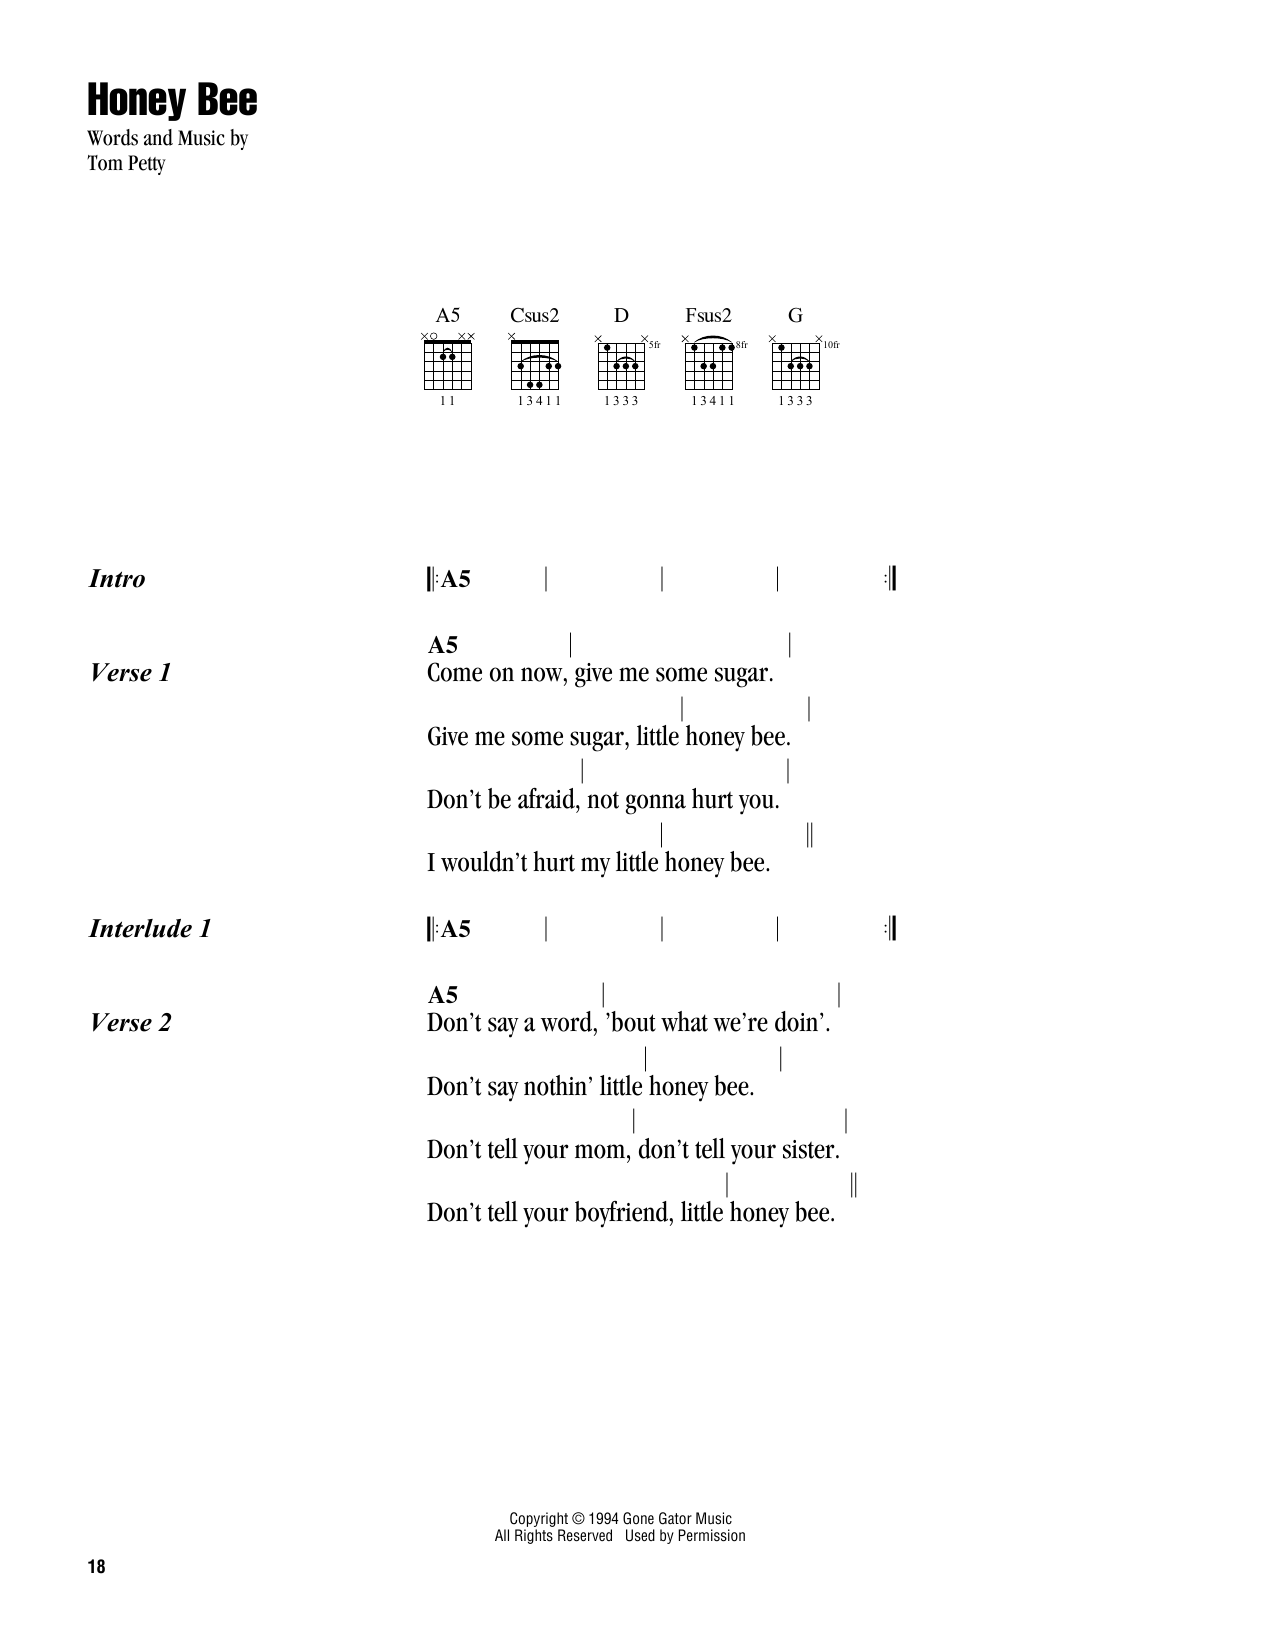 Tom Petty Honey Bee Sheet Music Notes & Chords for Guitar Chords/Lyrics - Download or Print PDF